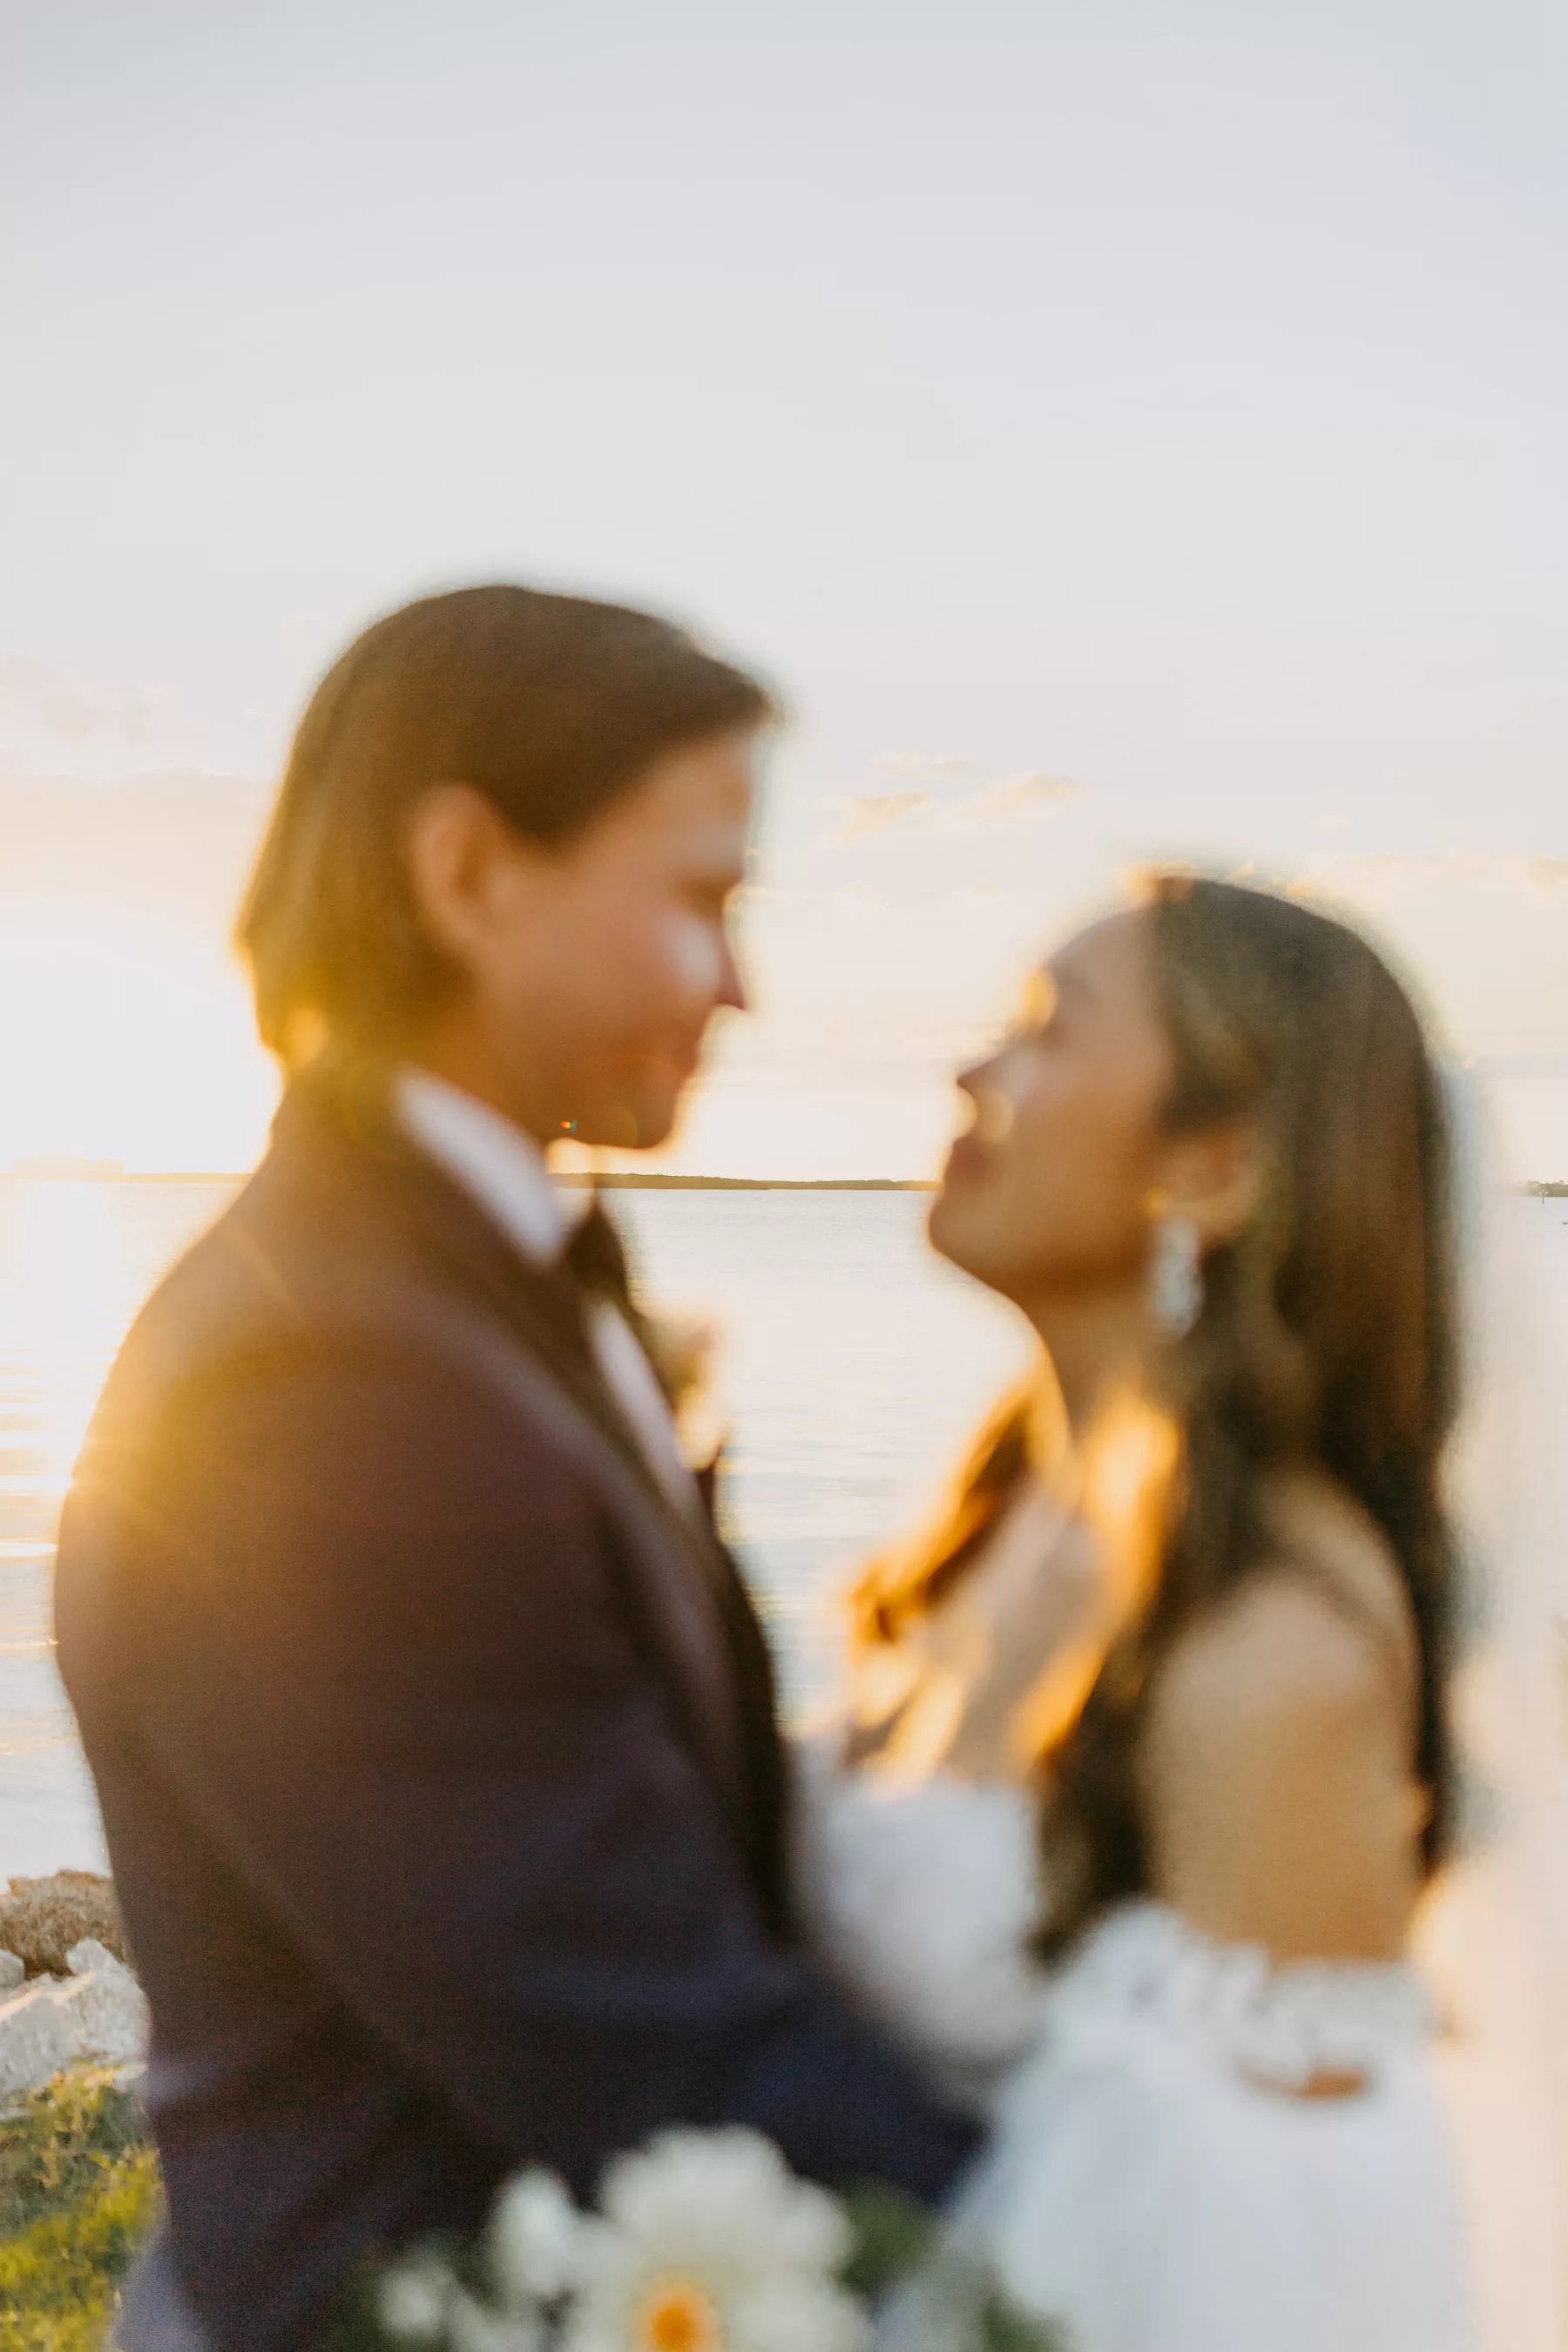 Romantic Sunset Bride and Groom Wedding Portrait | Tampa Bay Photographer Amber McWhorter Photography